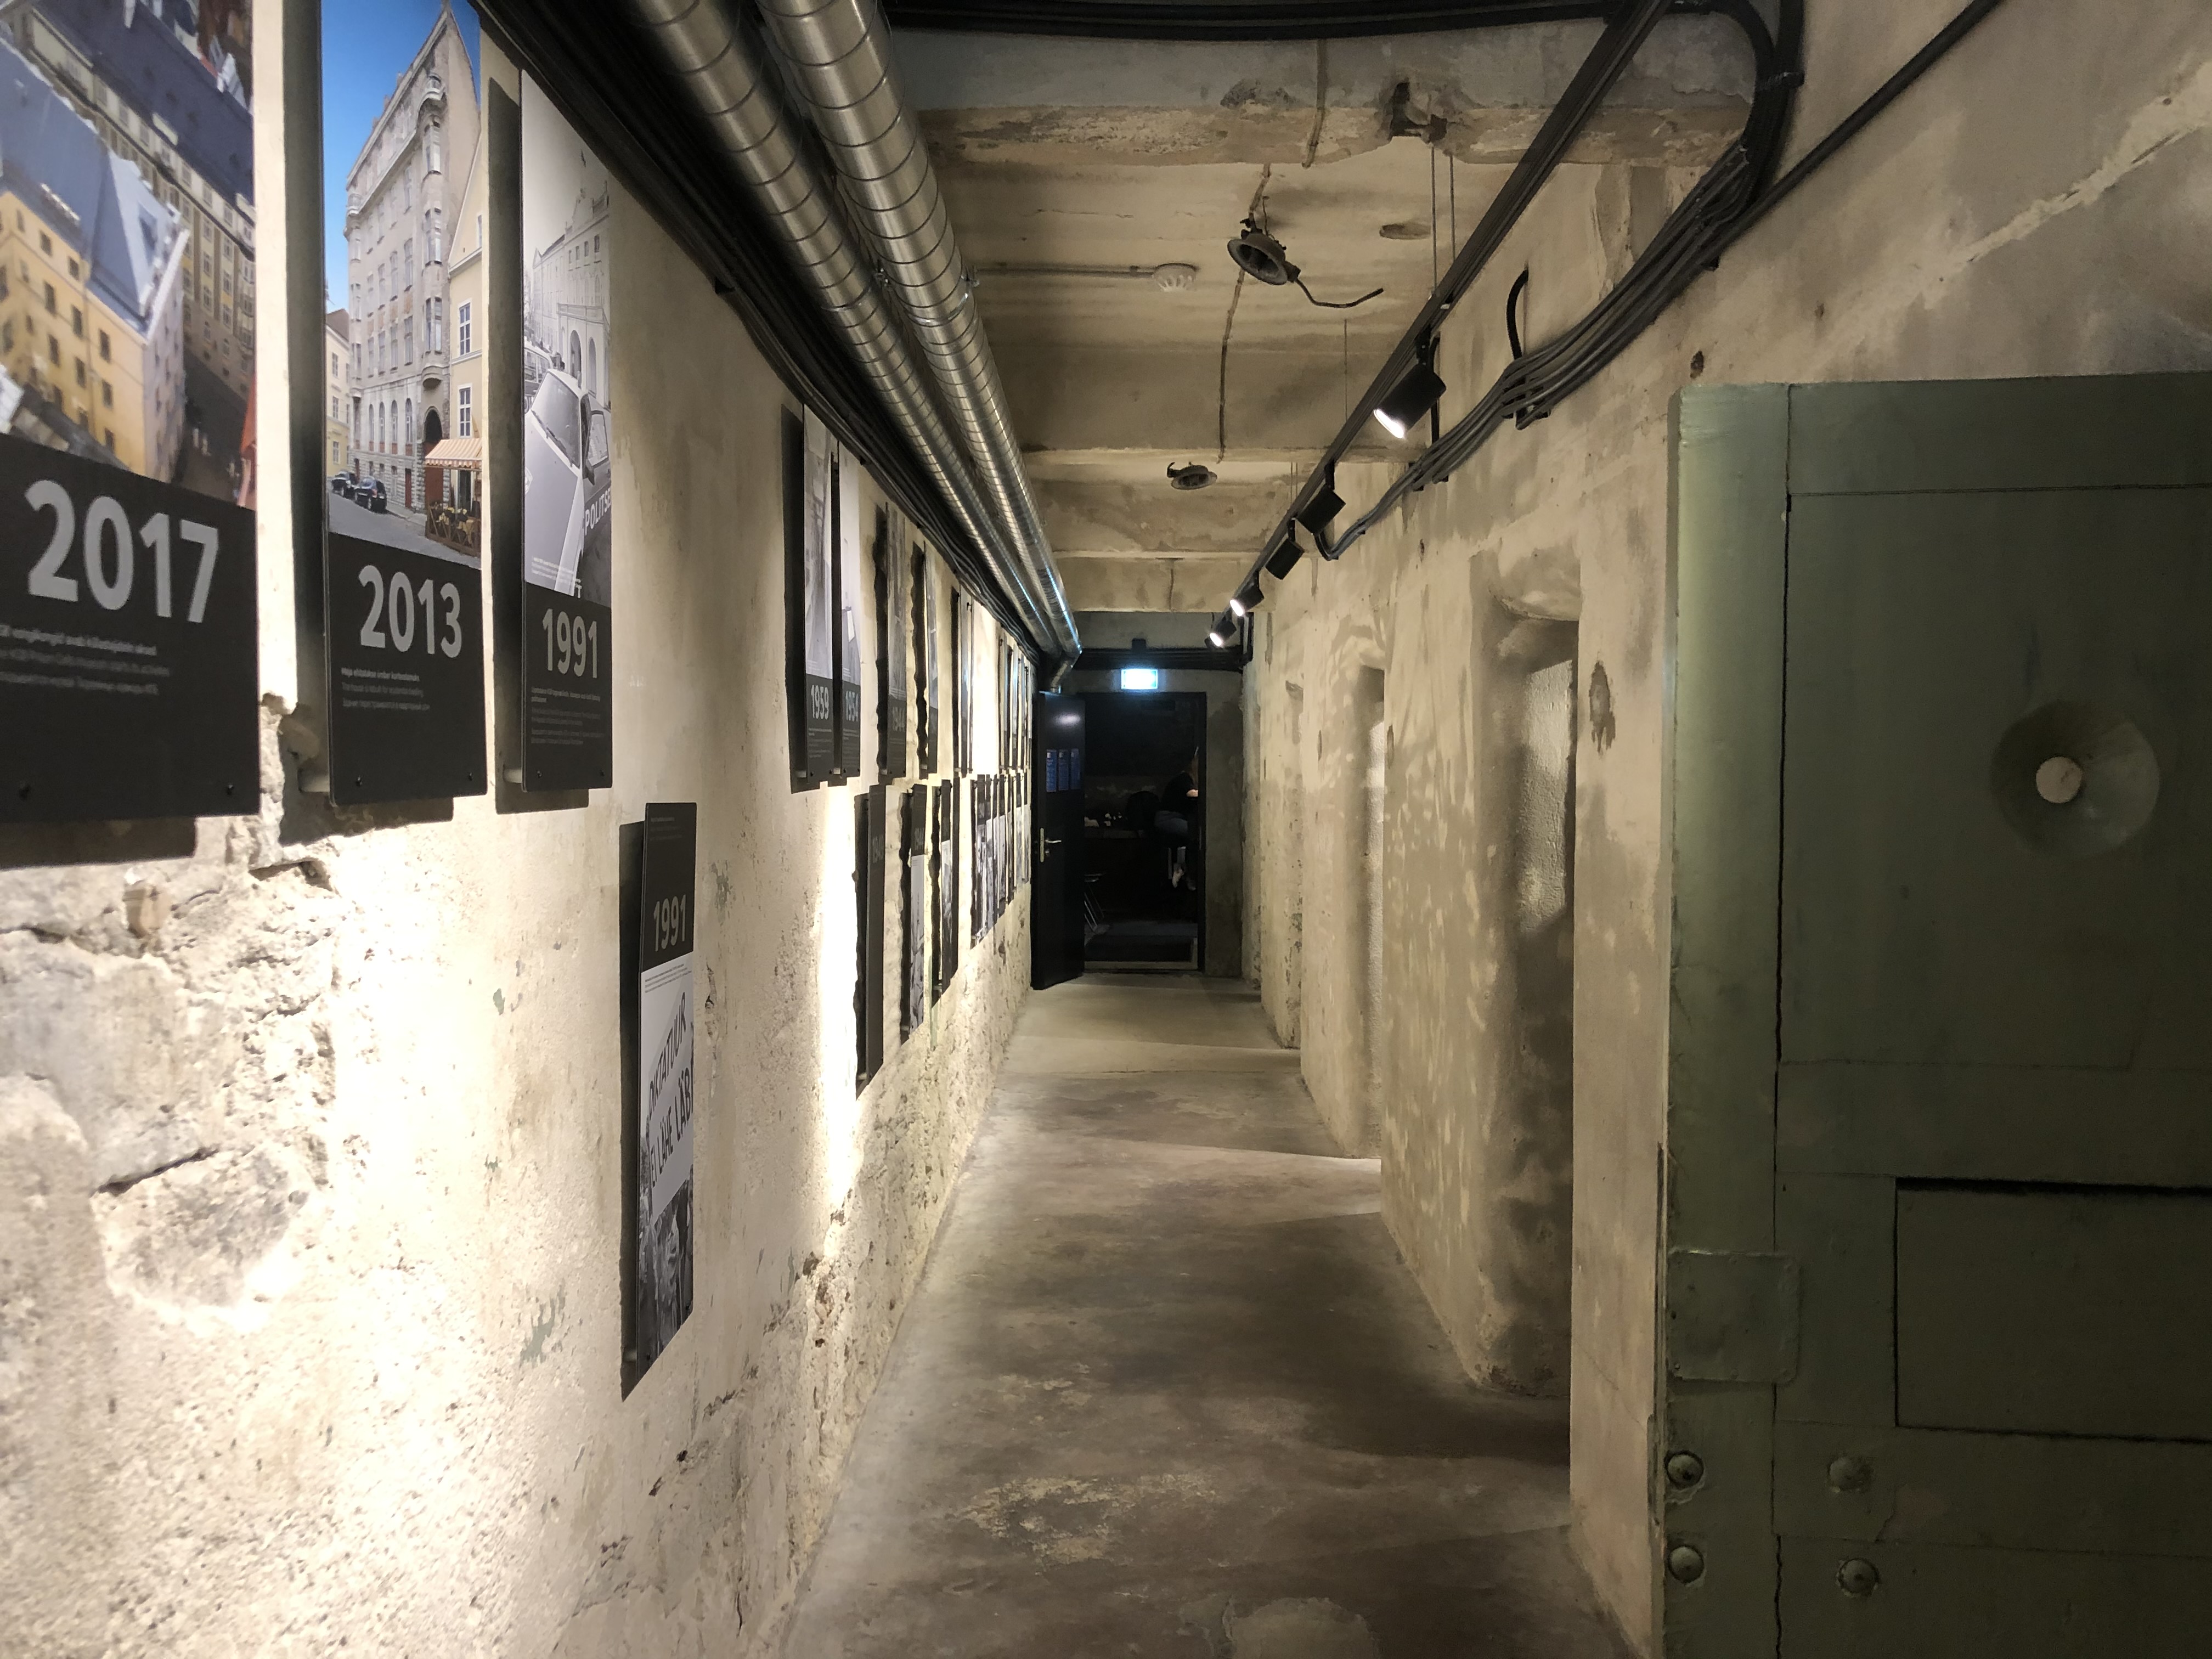 Former KGB prison cells in the Old Town of Tallinn, Estonia